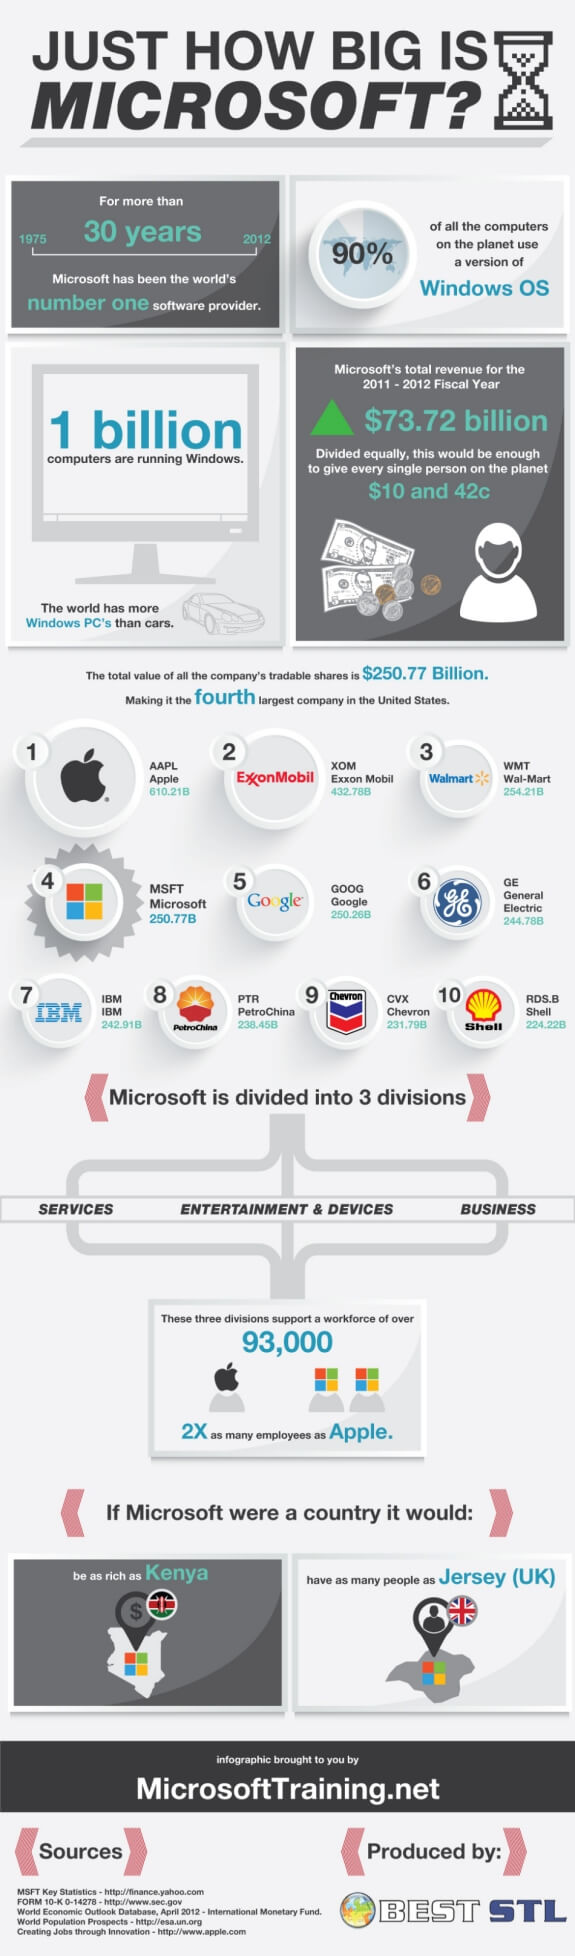 Just How Big Is Microsoft?